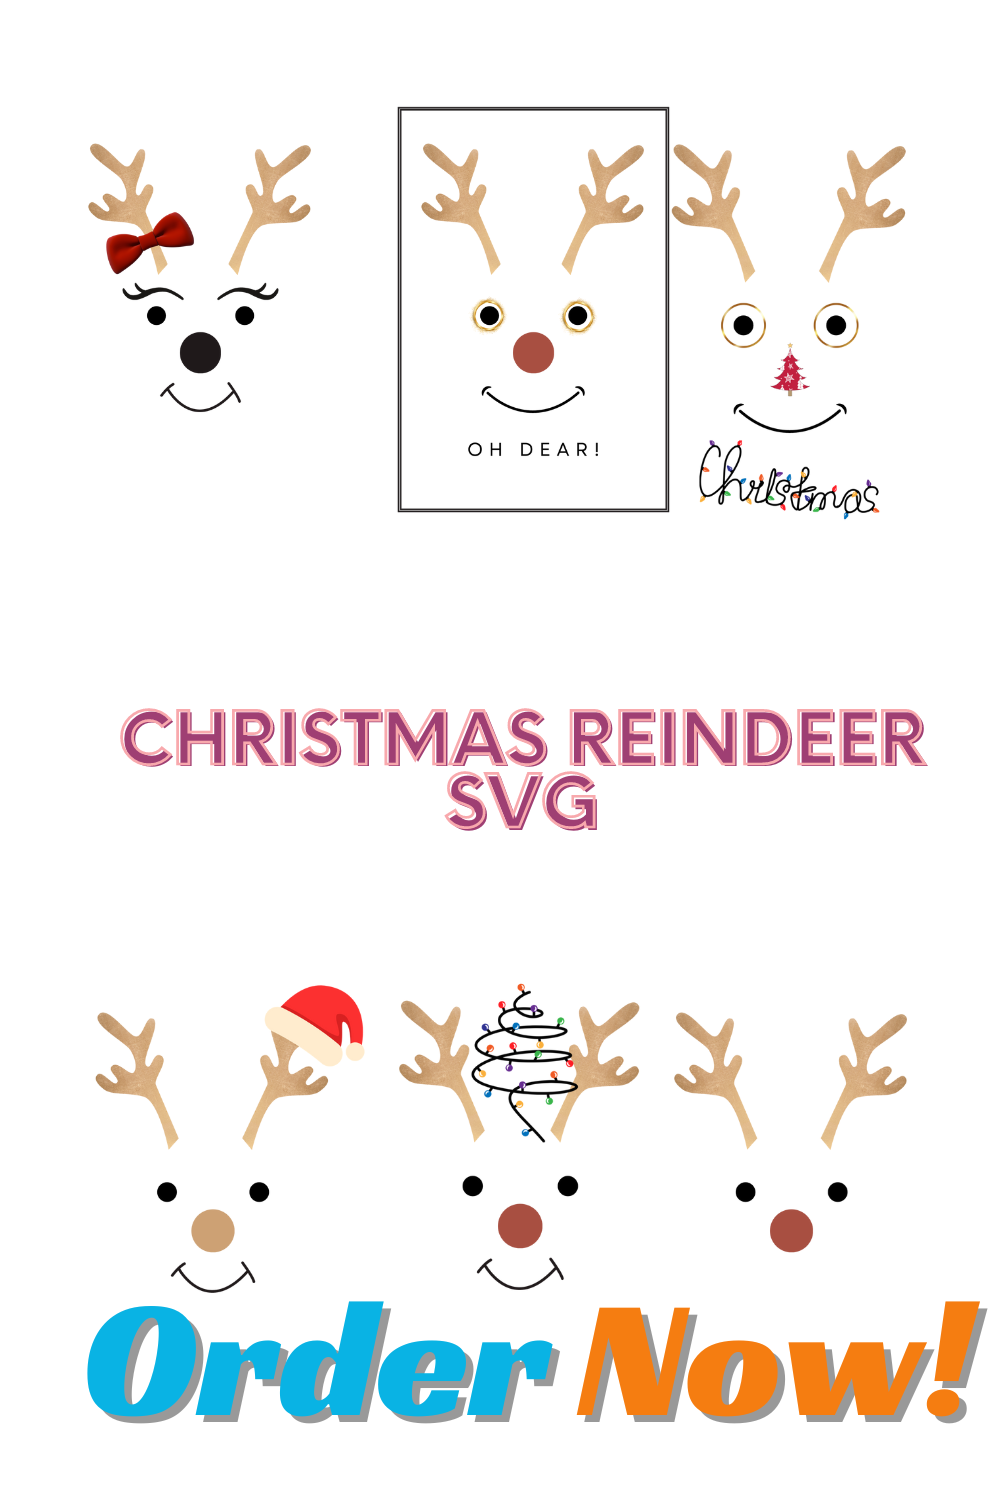 Reindeer SVG, Reindeer Face Svg, Christmas Reindeer Svg, Rudolph reindeer svg, Xmas reindeer svg, Santa reindeer, DXF Cricut cut file vector pinterest preview image.